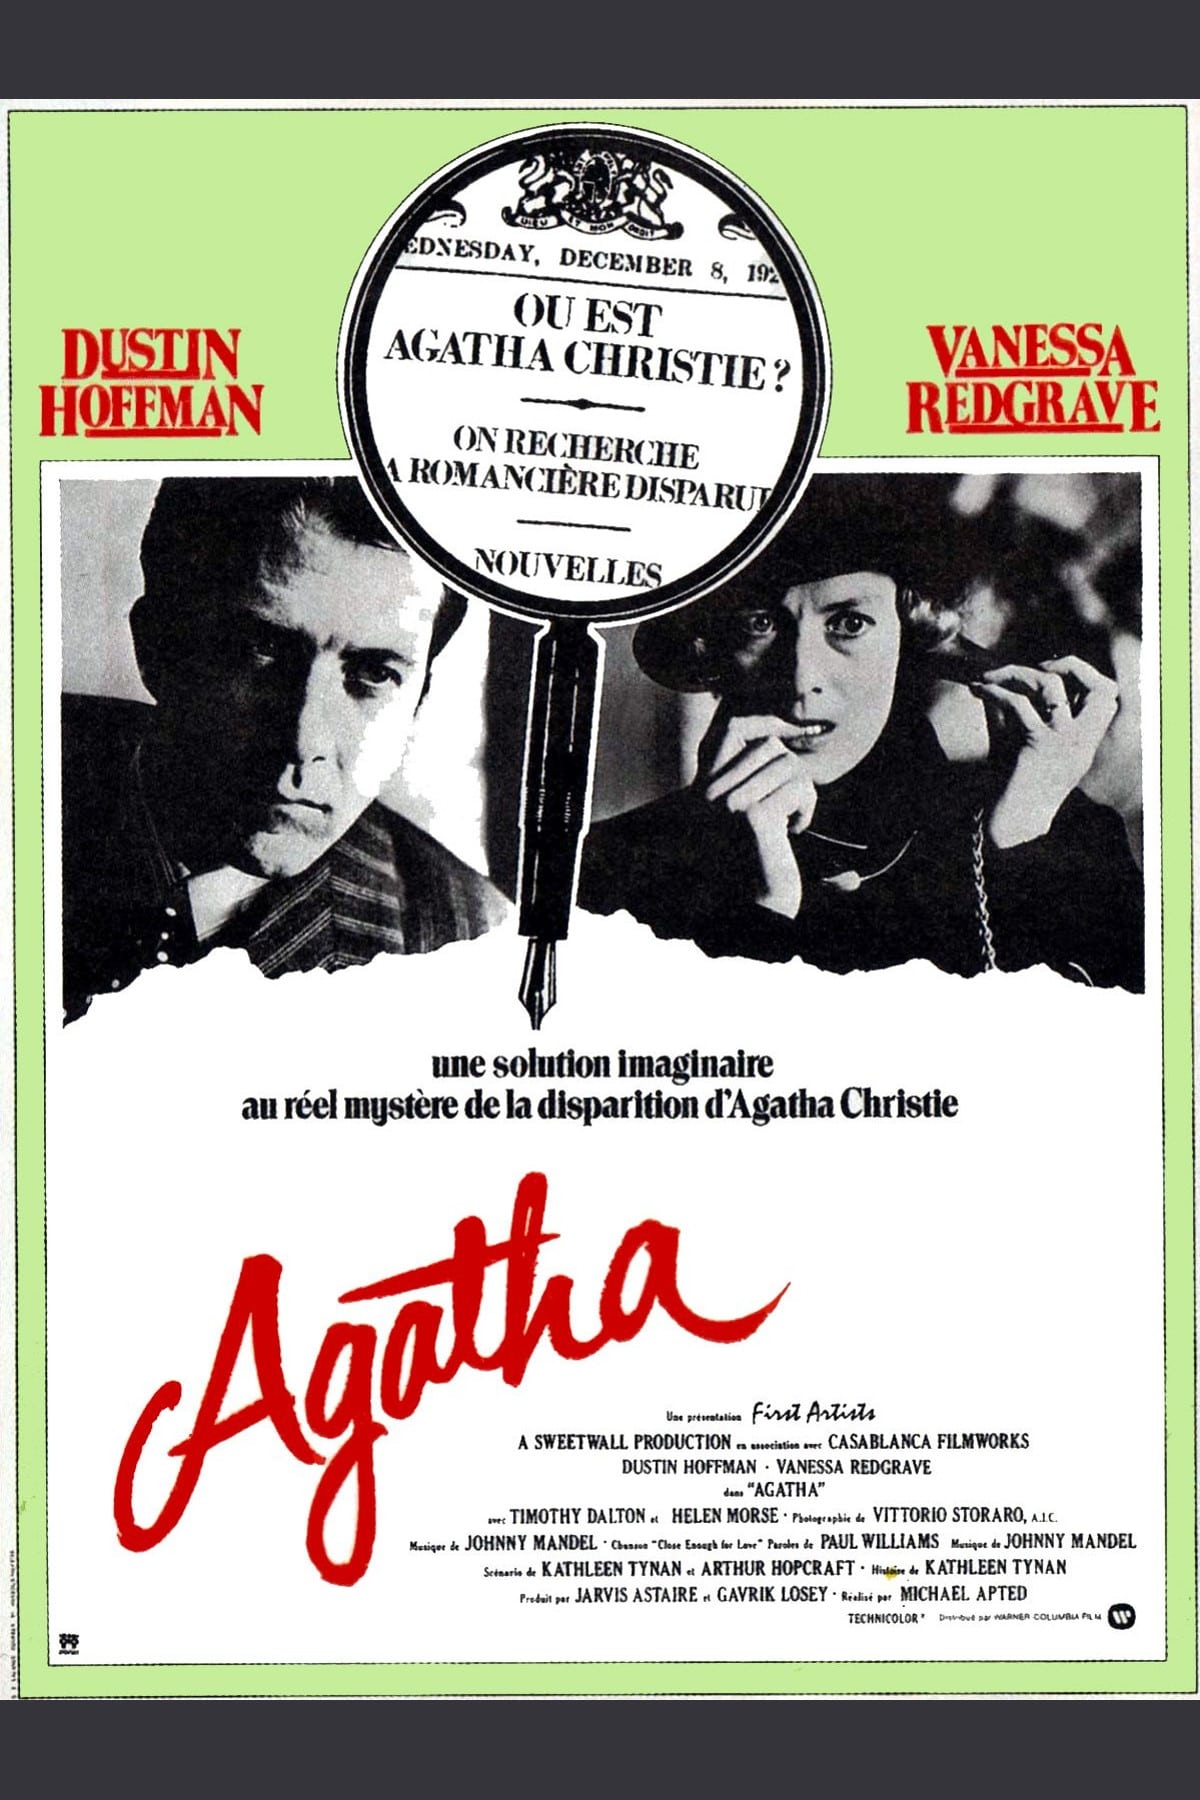 Agatha streaming